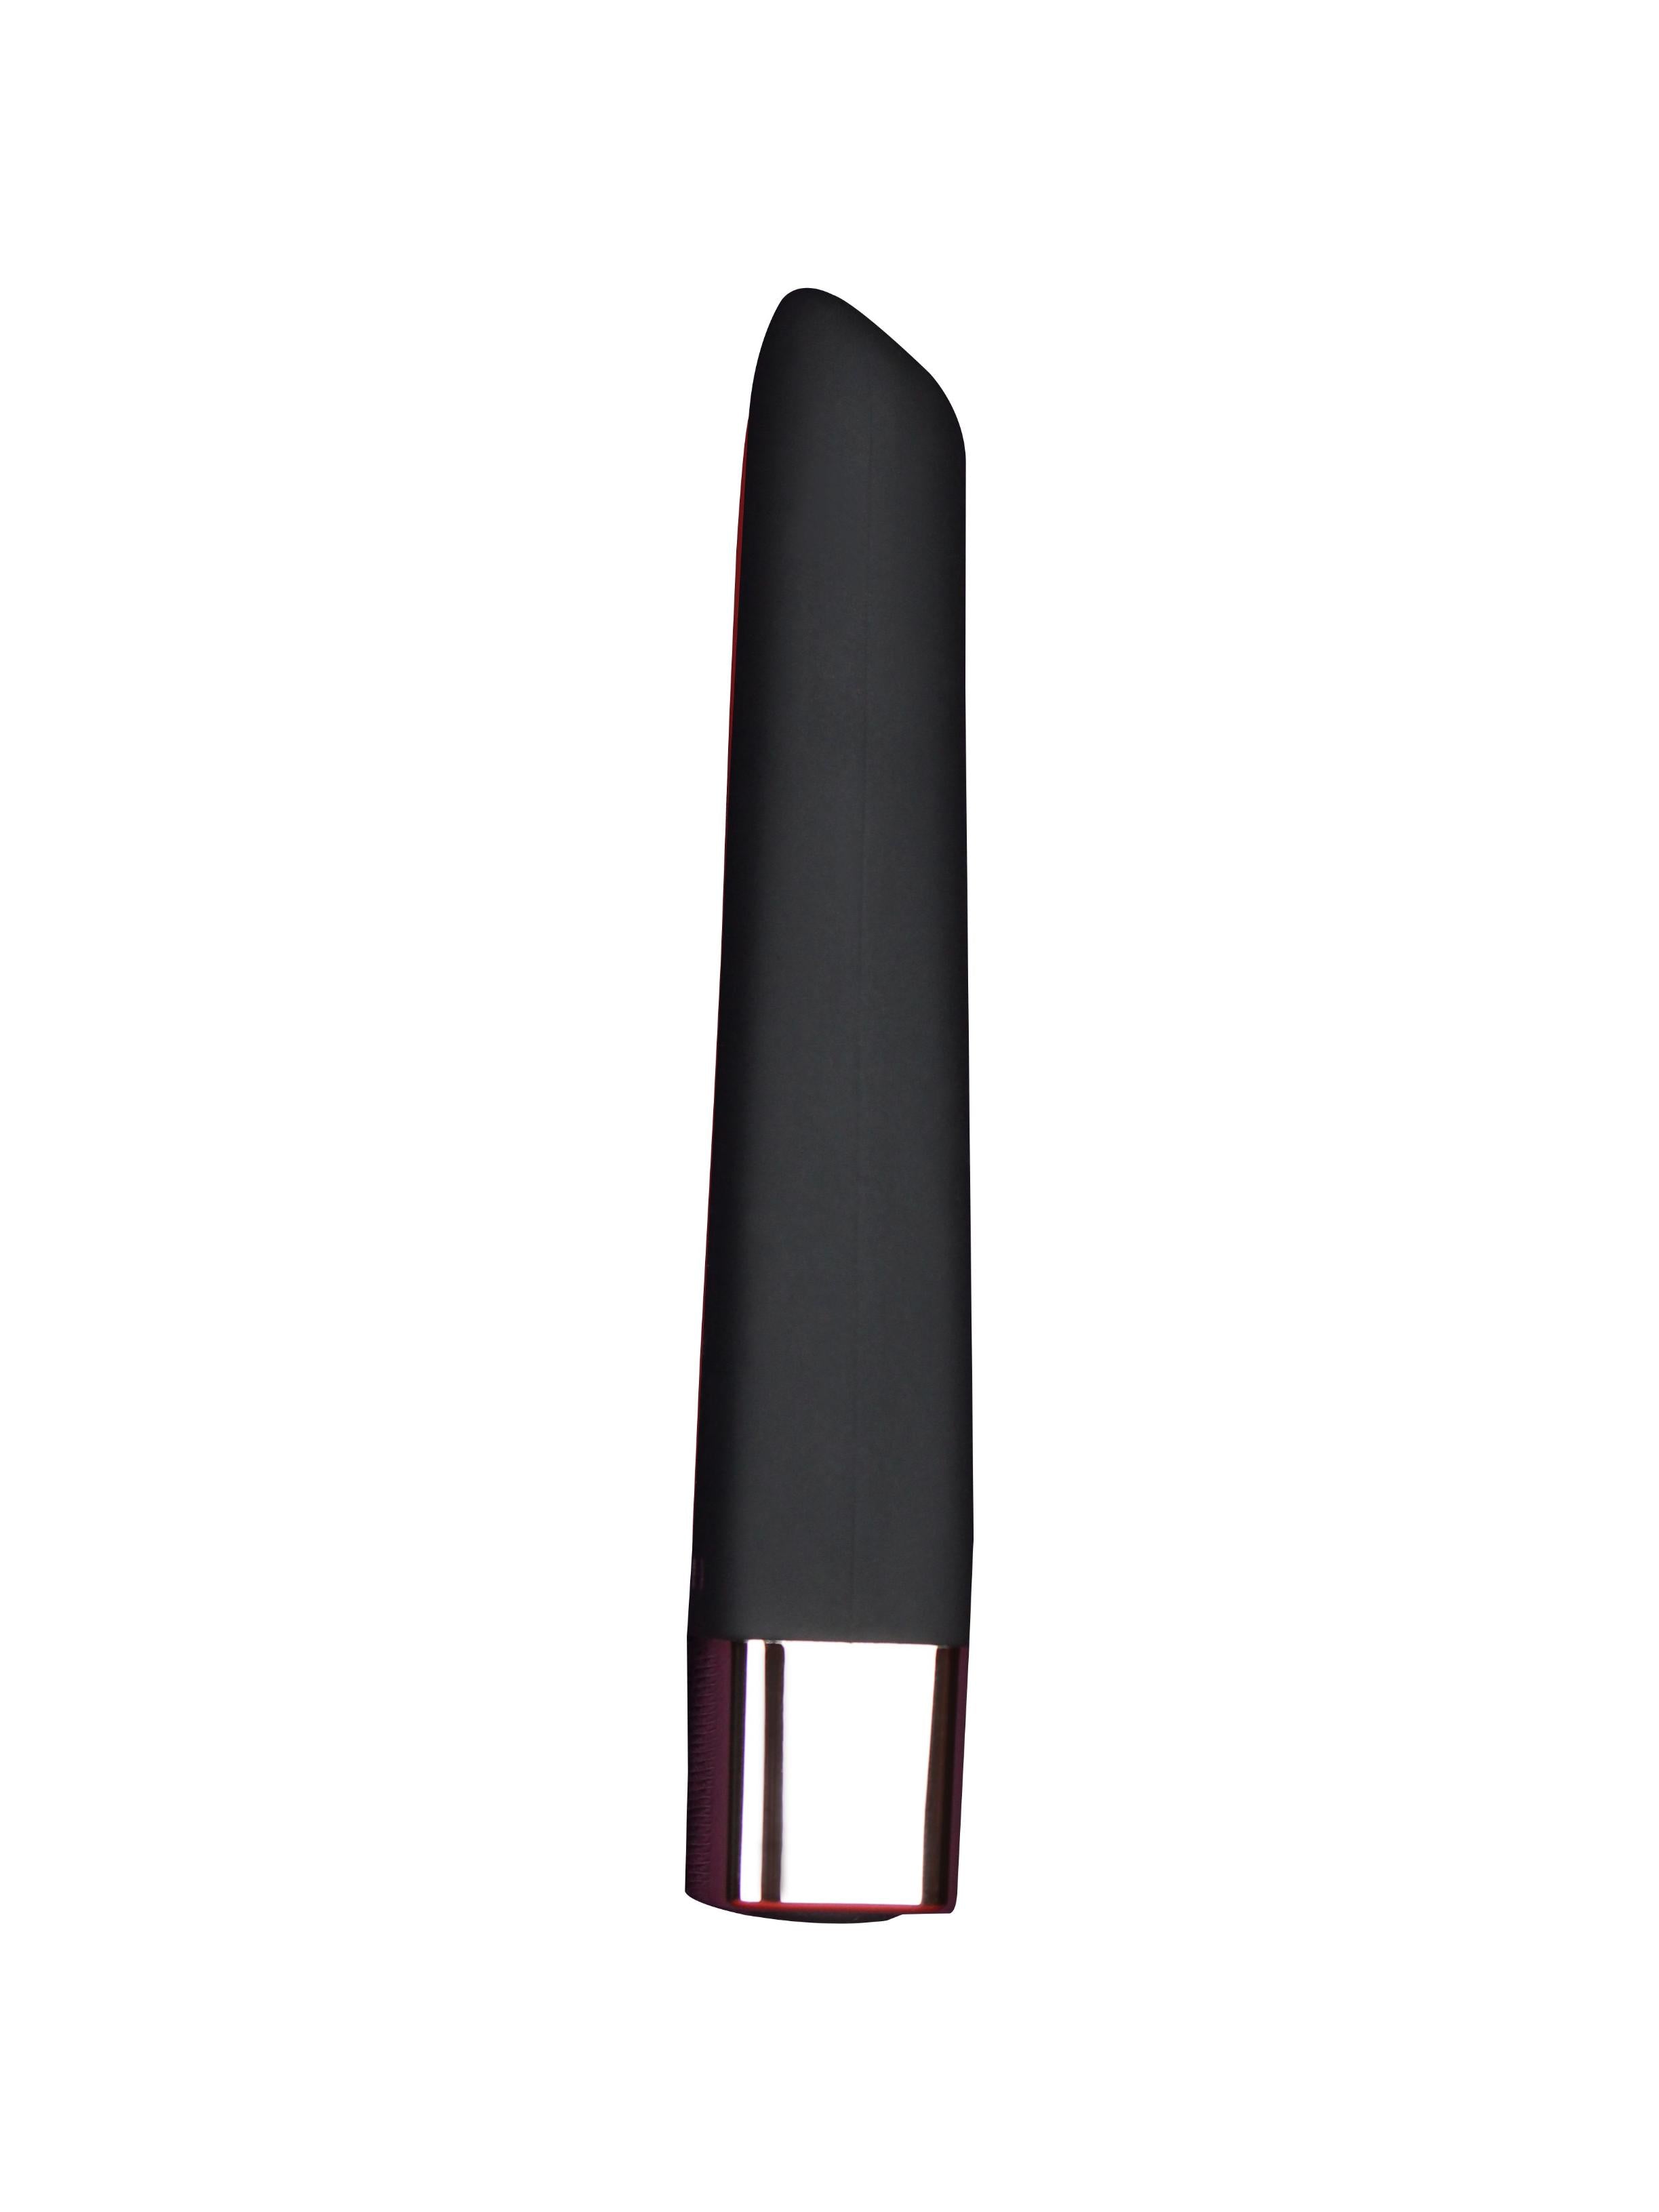 Ultra Edonista Quinn Silicone Bullet Vibrator Black 10 Modes